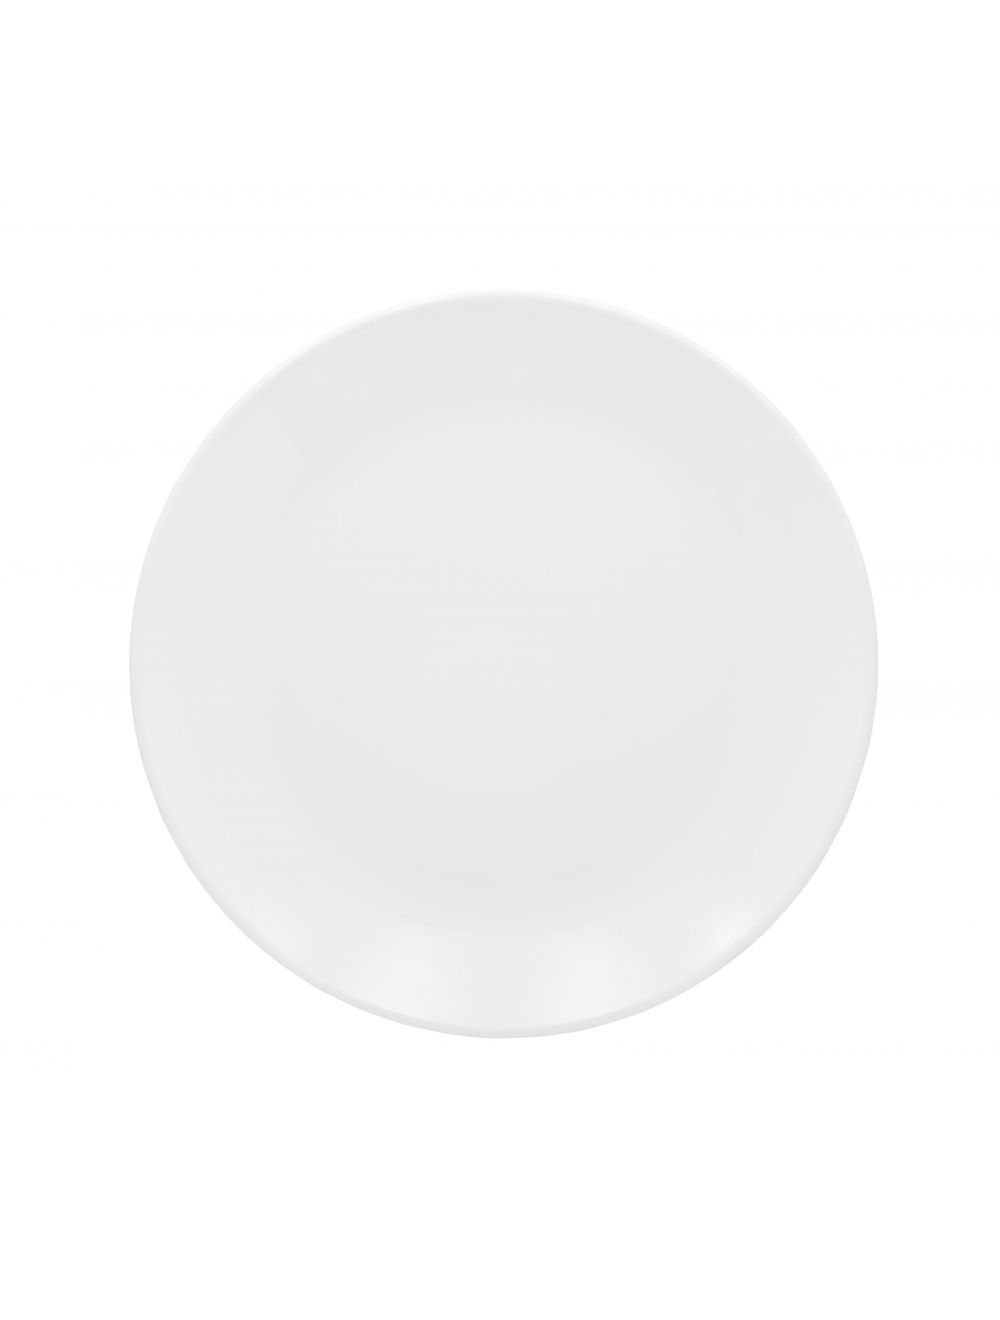 Dinewell Melamine Dinner Plate White-DWHP3089W